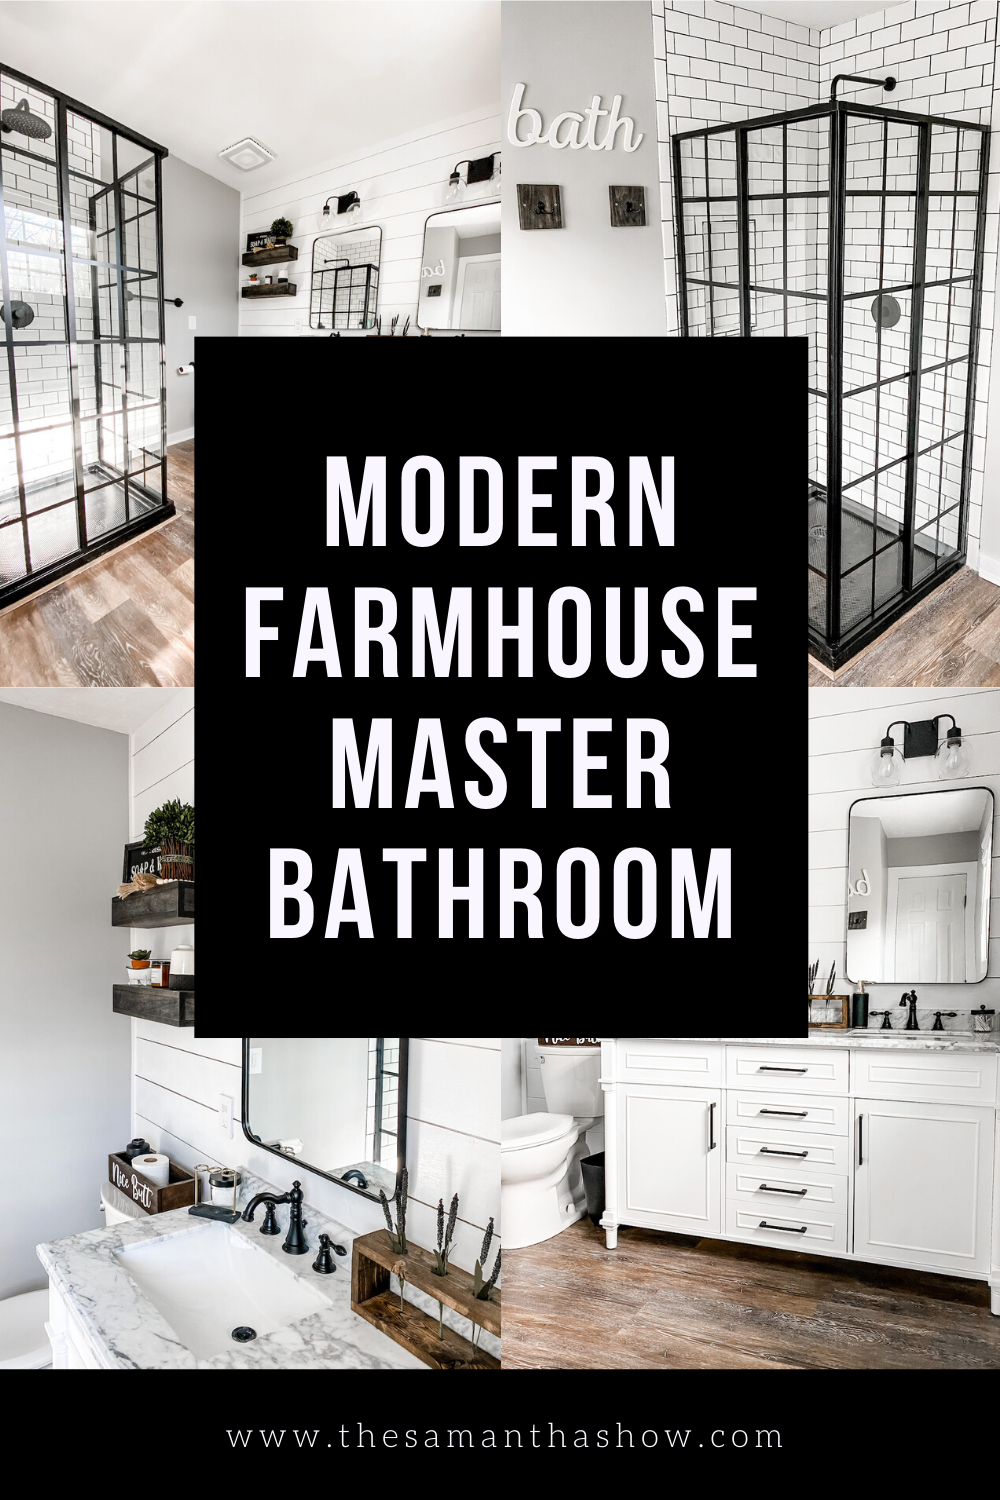 Modern farmhouse master bathroom remodel pic